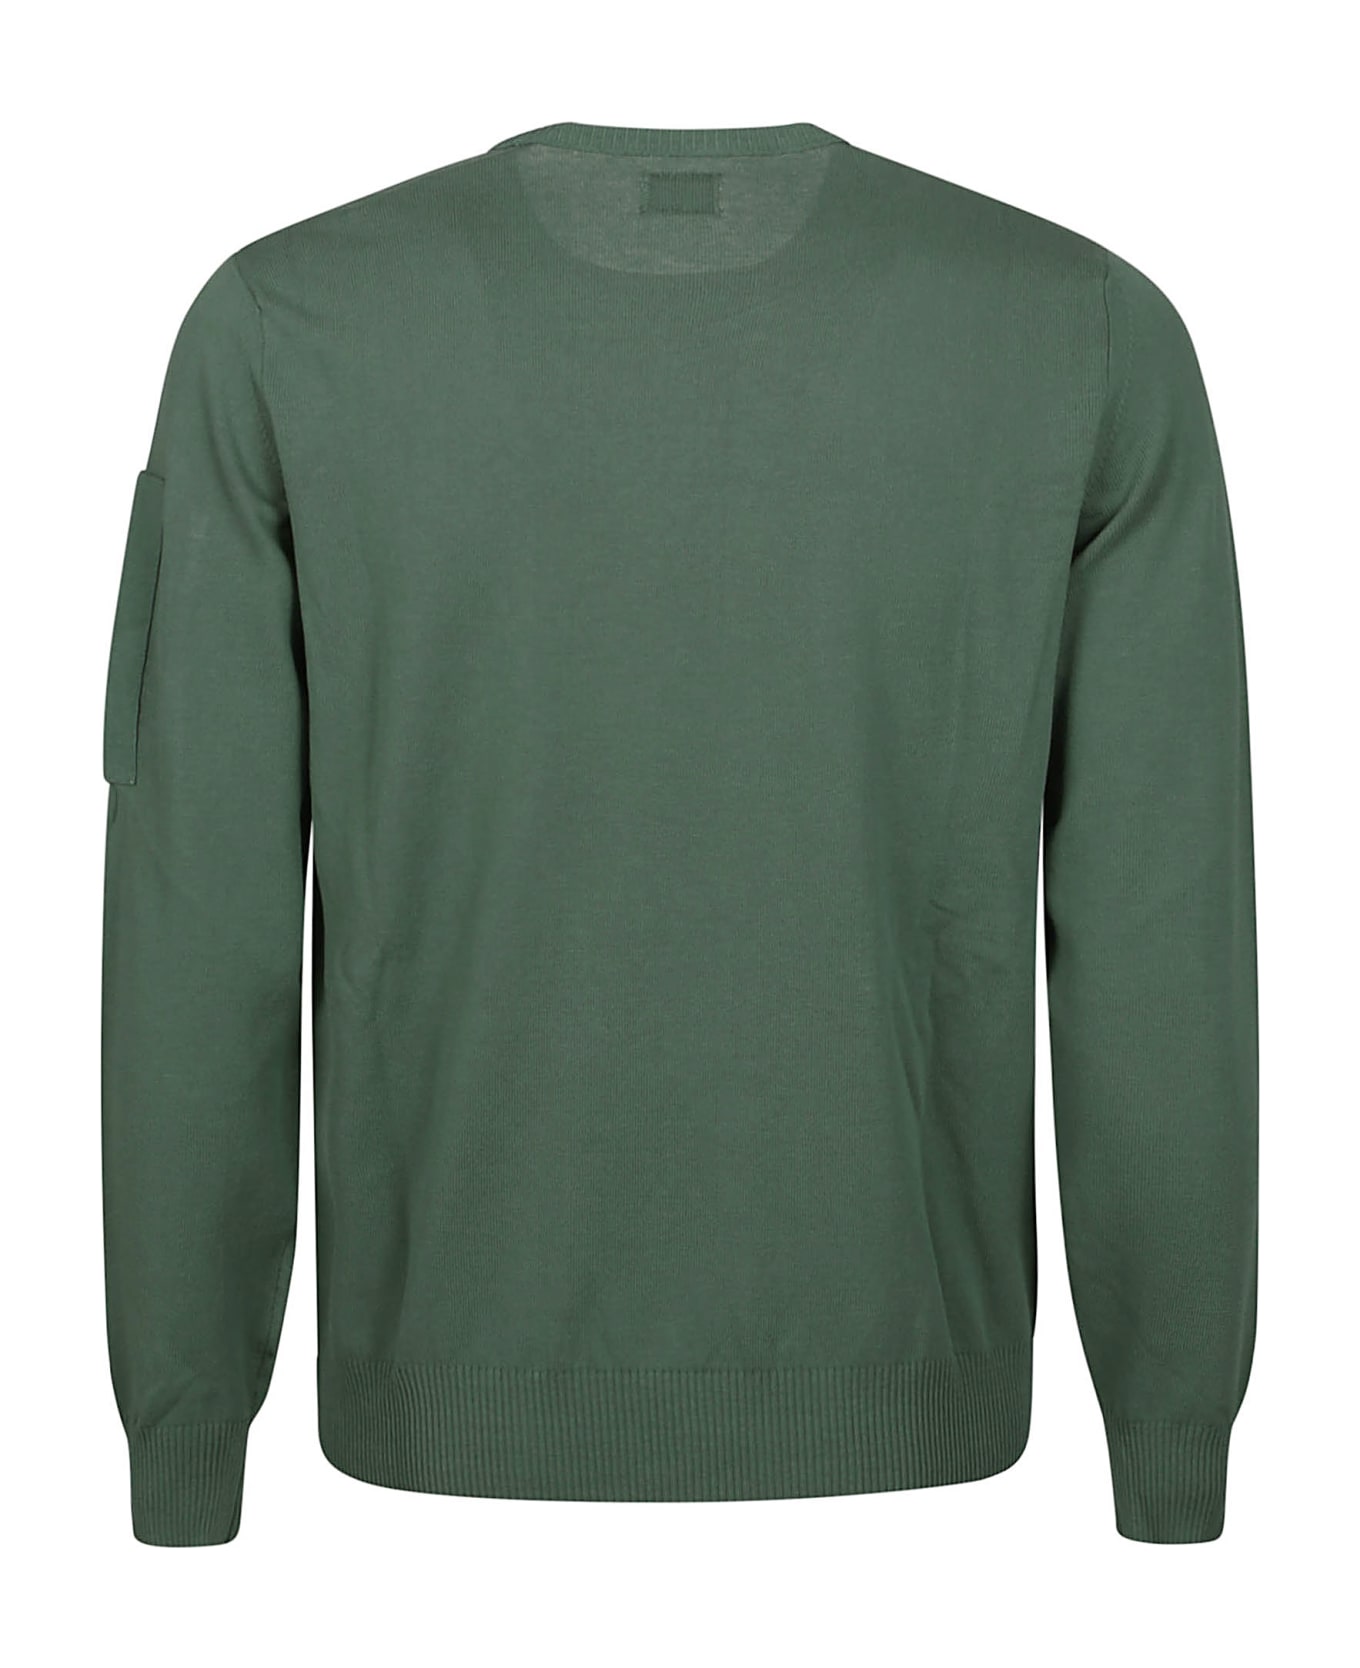 C.P. Company Sweater - Duck Green